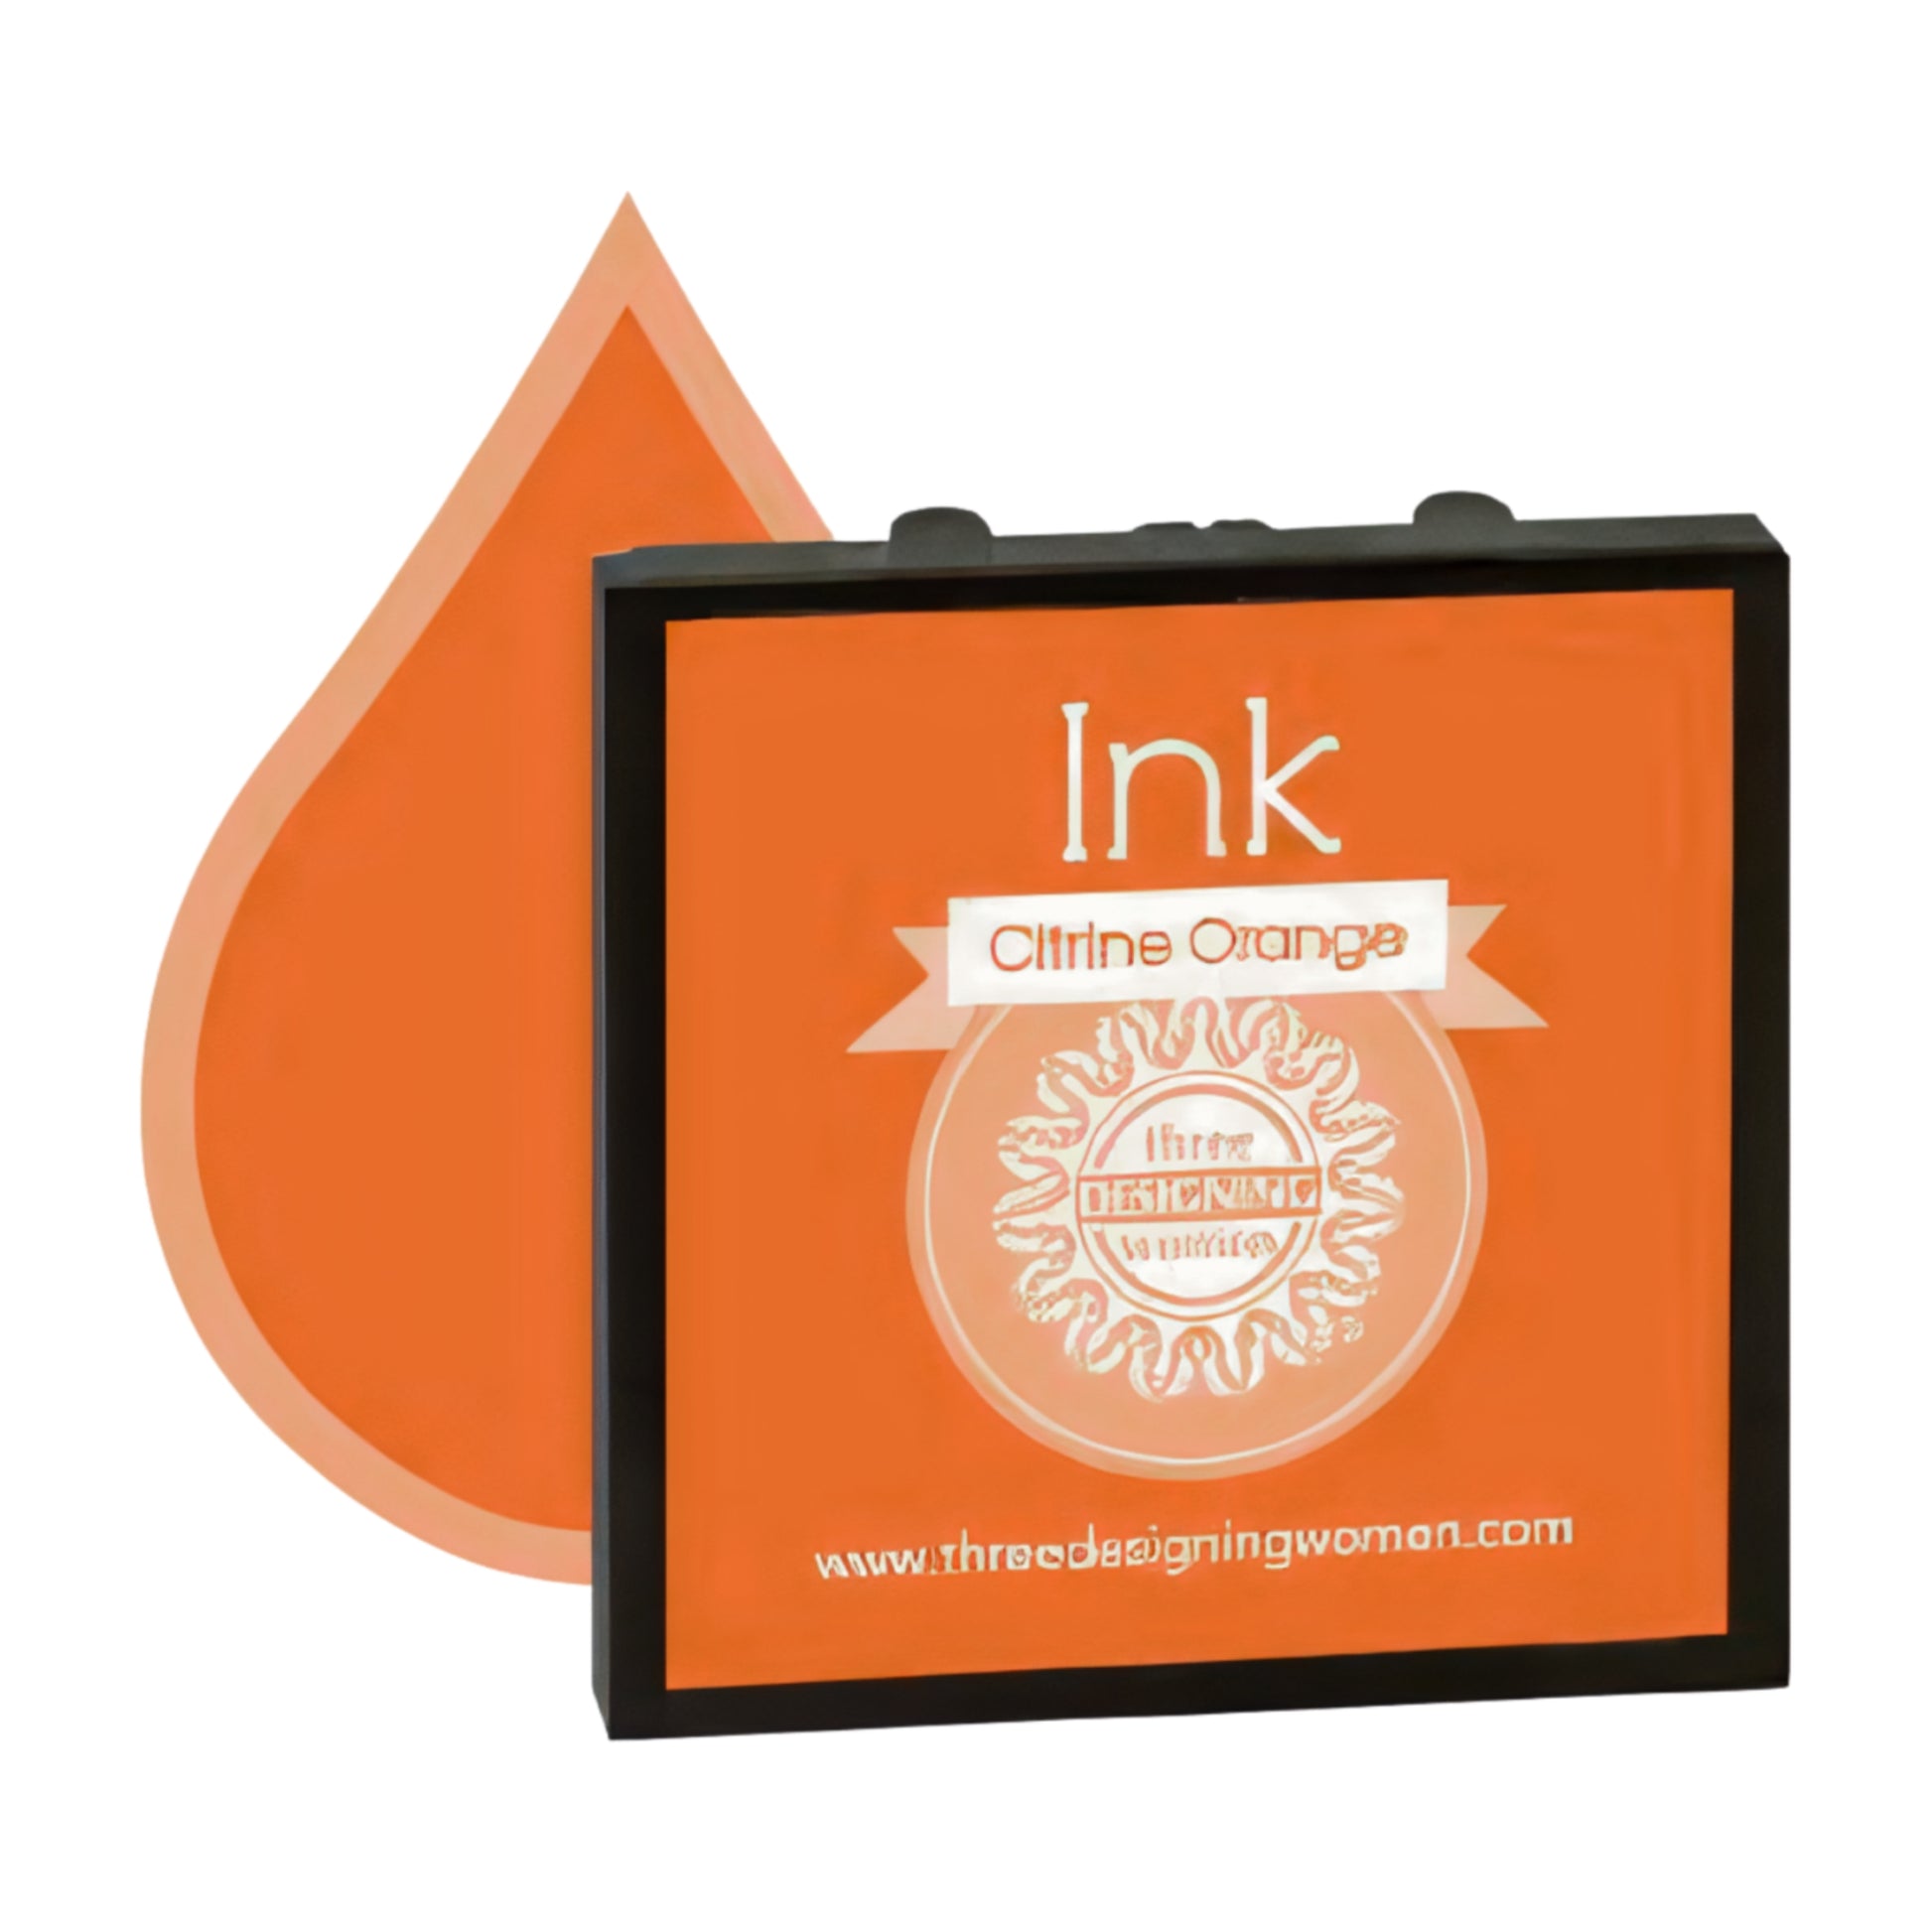 Ink Replacement Cartridge "Citrine Orange" for Self-Inking Stampers Three Designing Women